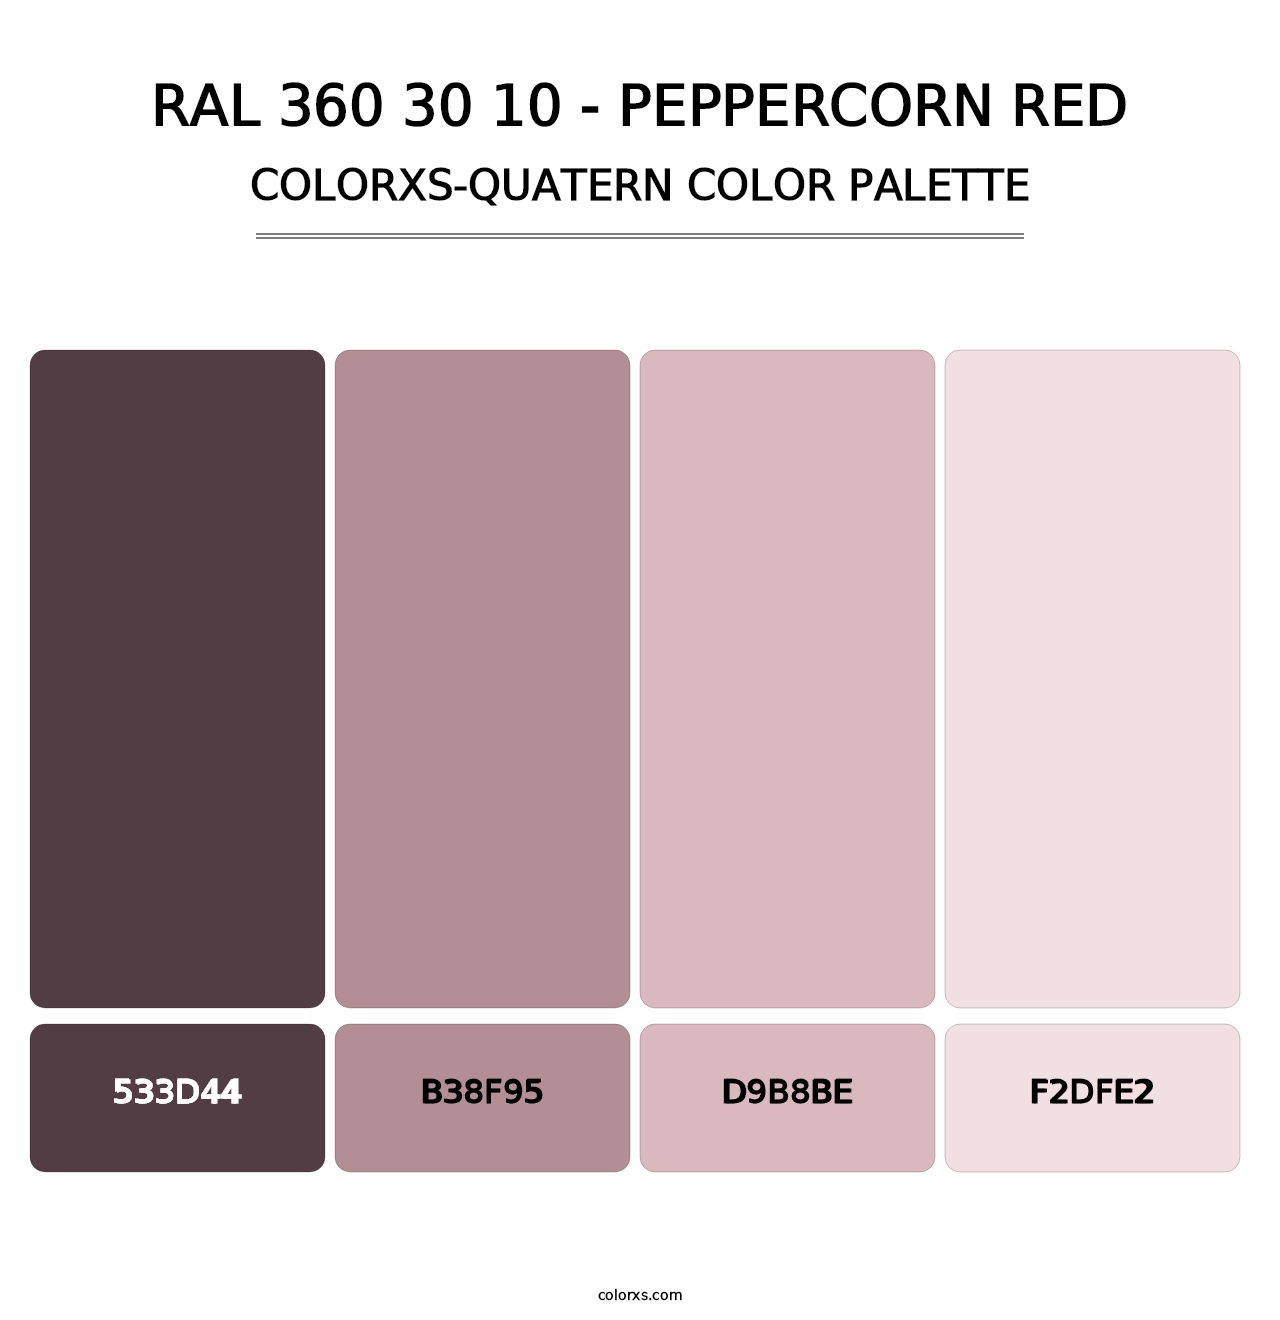 RAL 360 30 10 - Peppercorn Red - Colorxs Quatern Palette